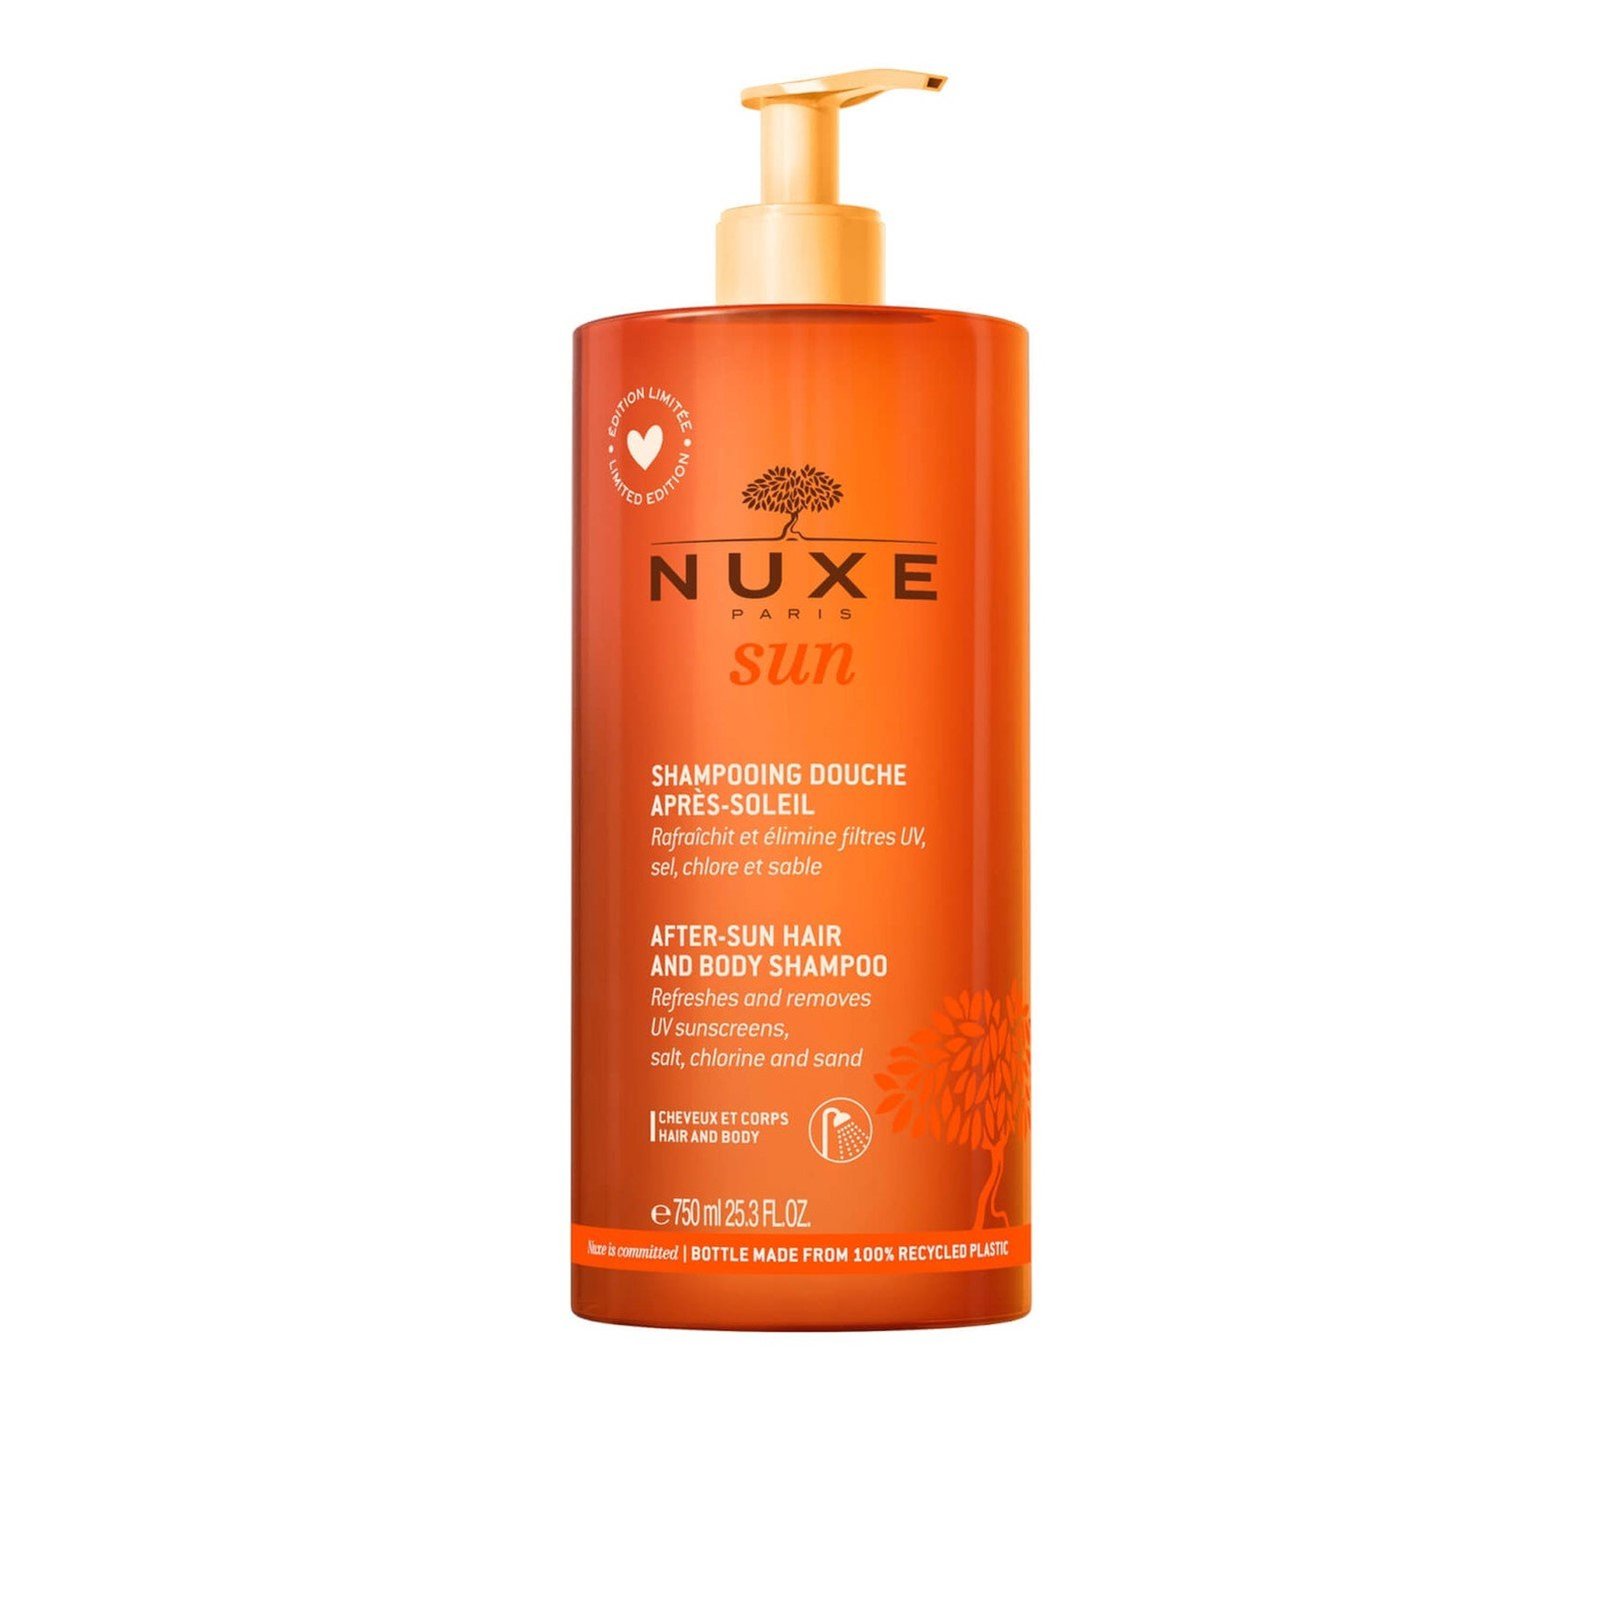 NUXE Sun After-Sun Hair And Body Shampoo 750ml